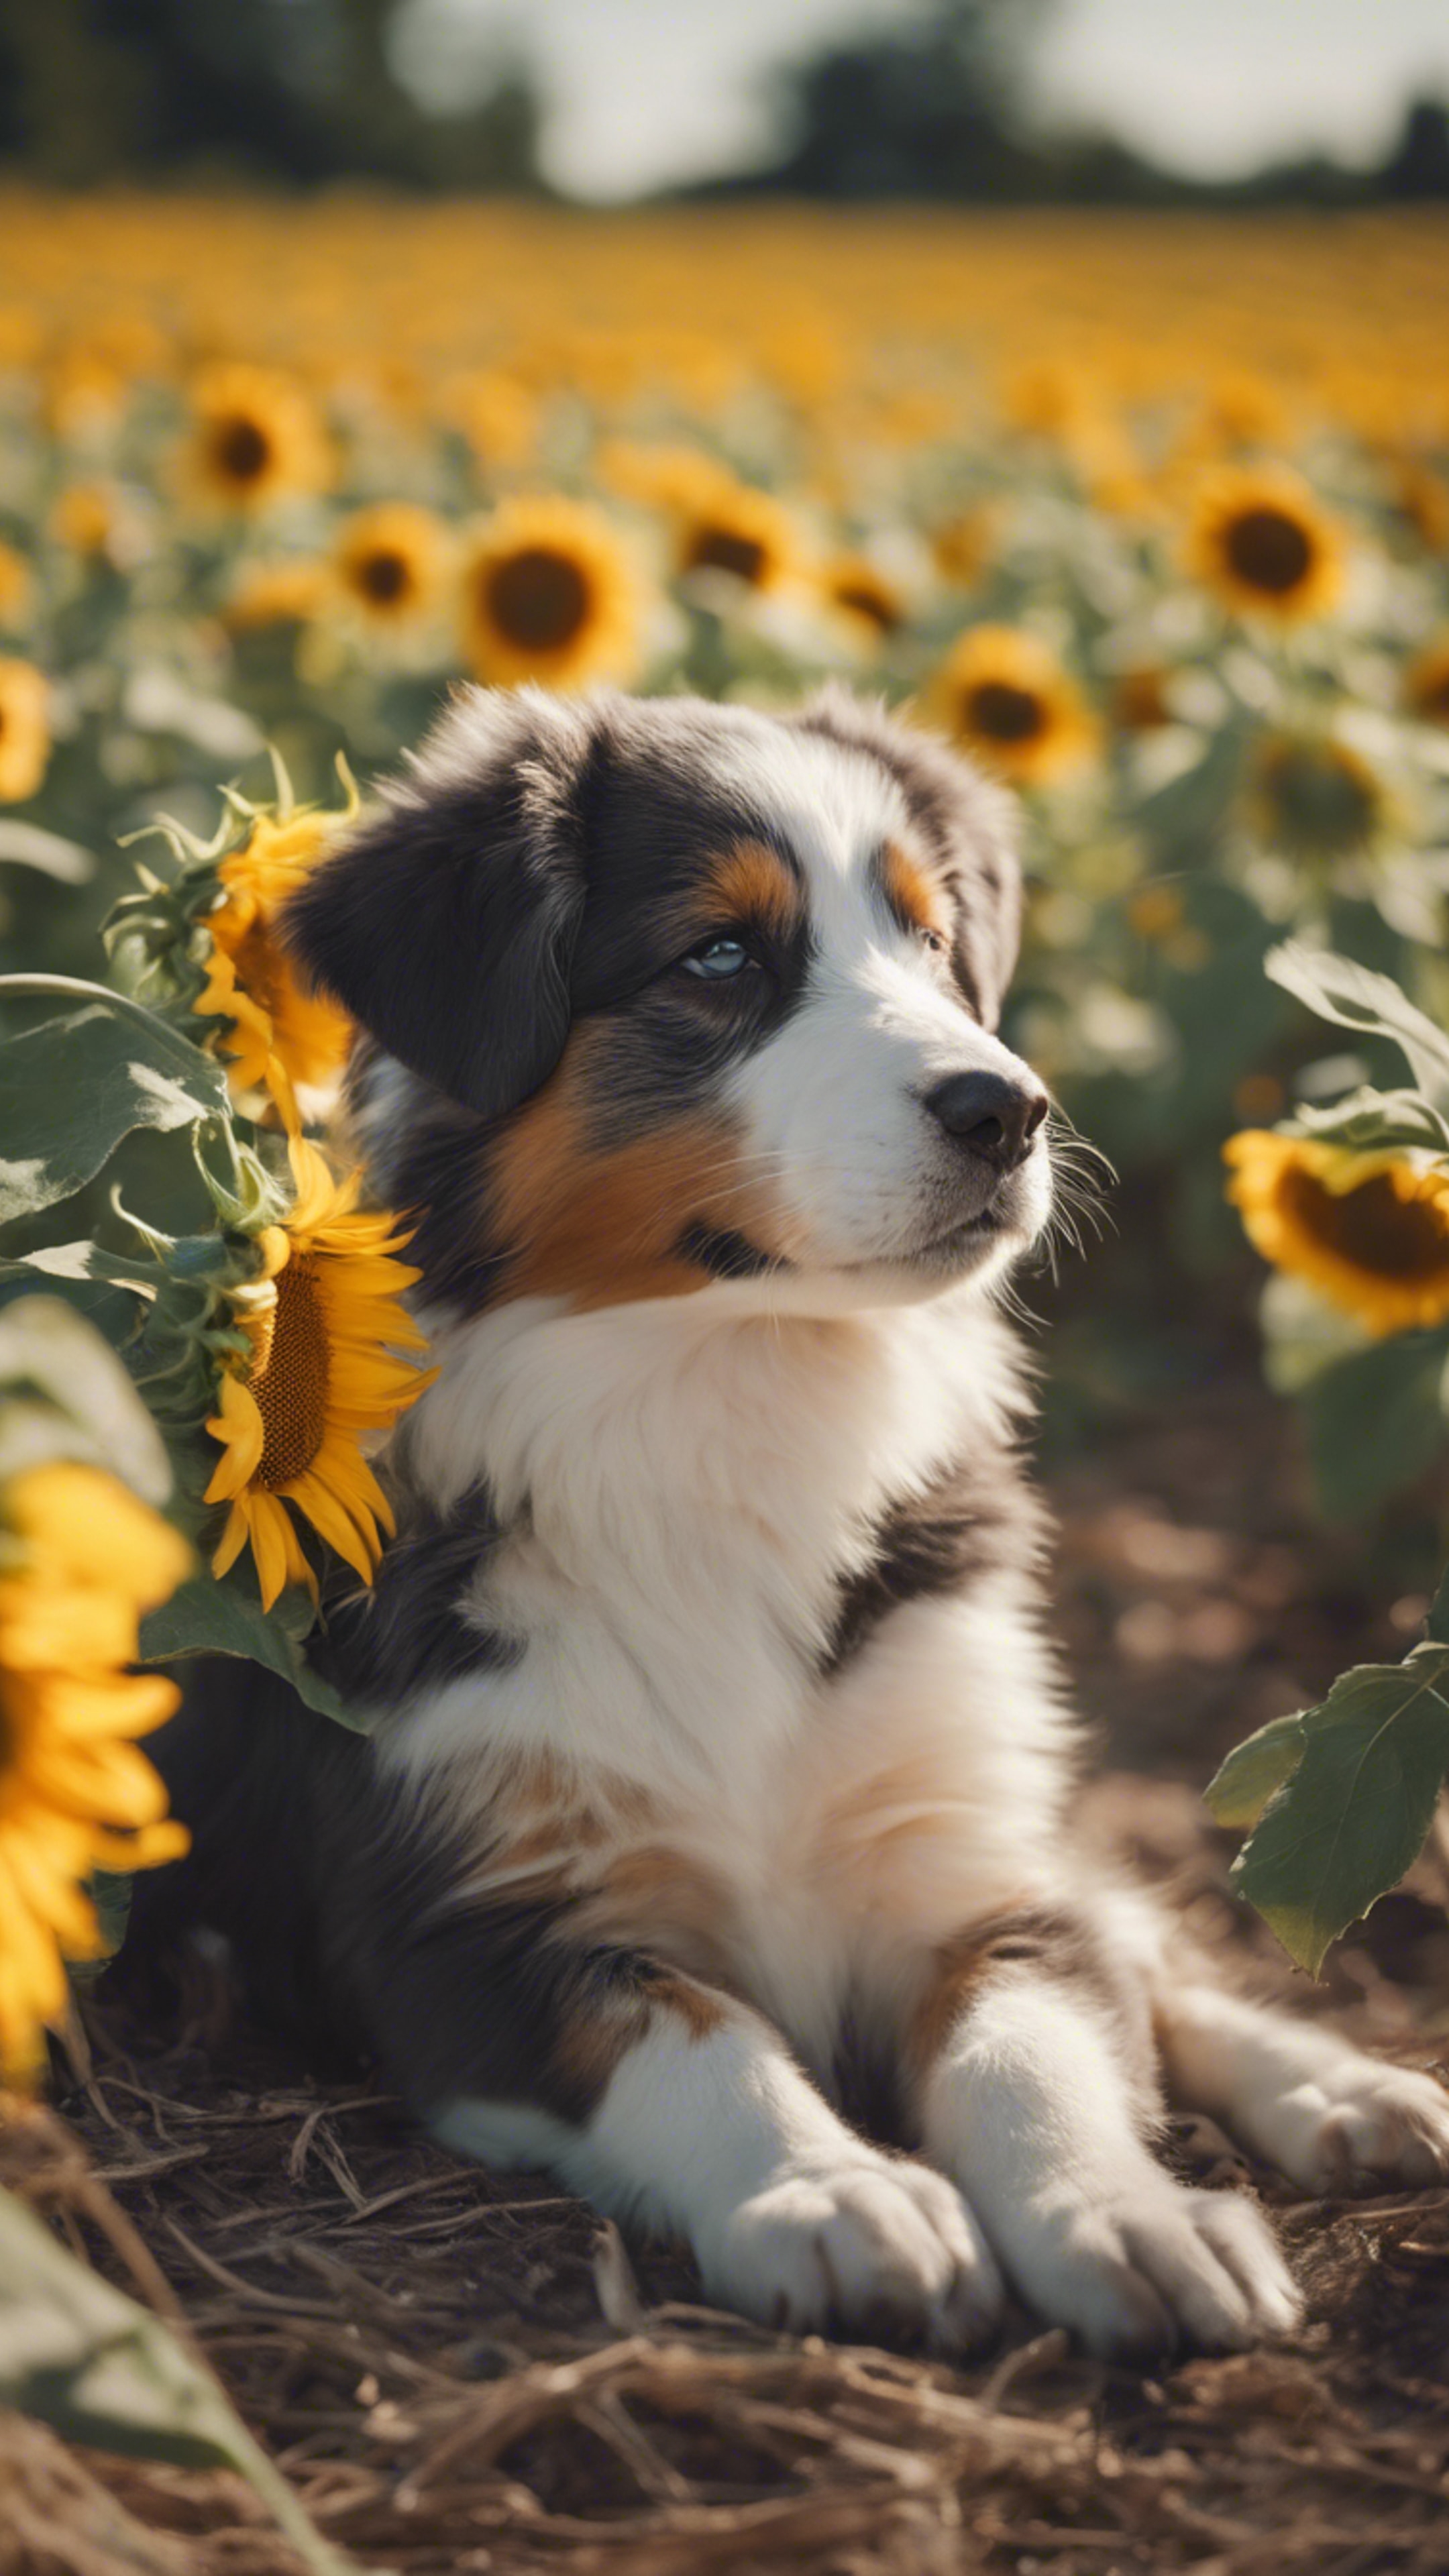 An Australian Shepard puppy dozing off in the field of blooming sunflowers under the summer sun. Hình nền[3112e983c8704a9792f4]